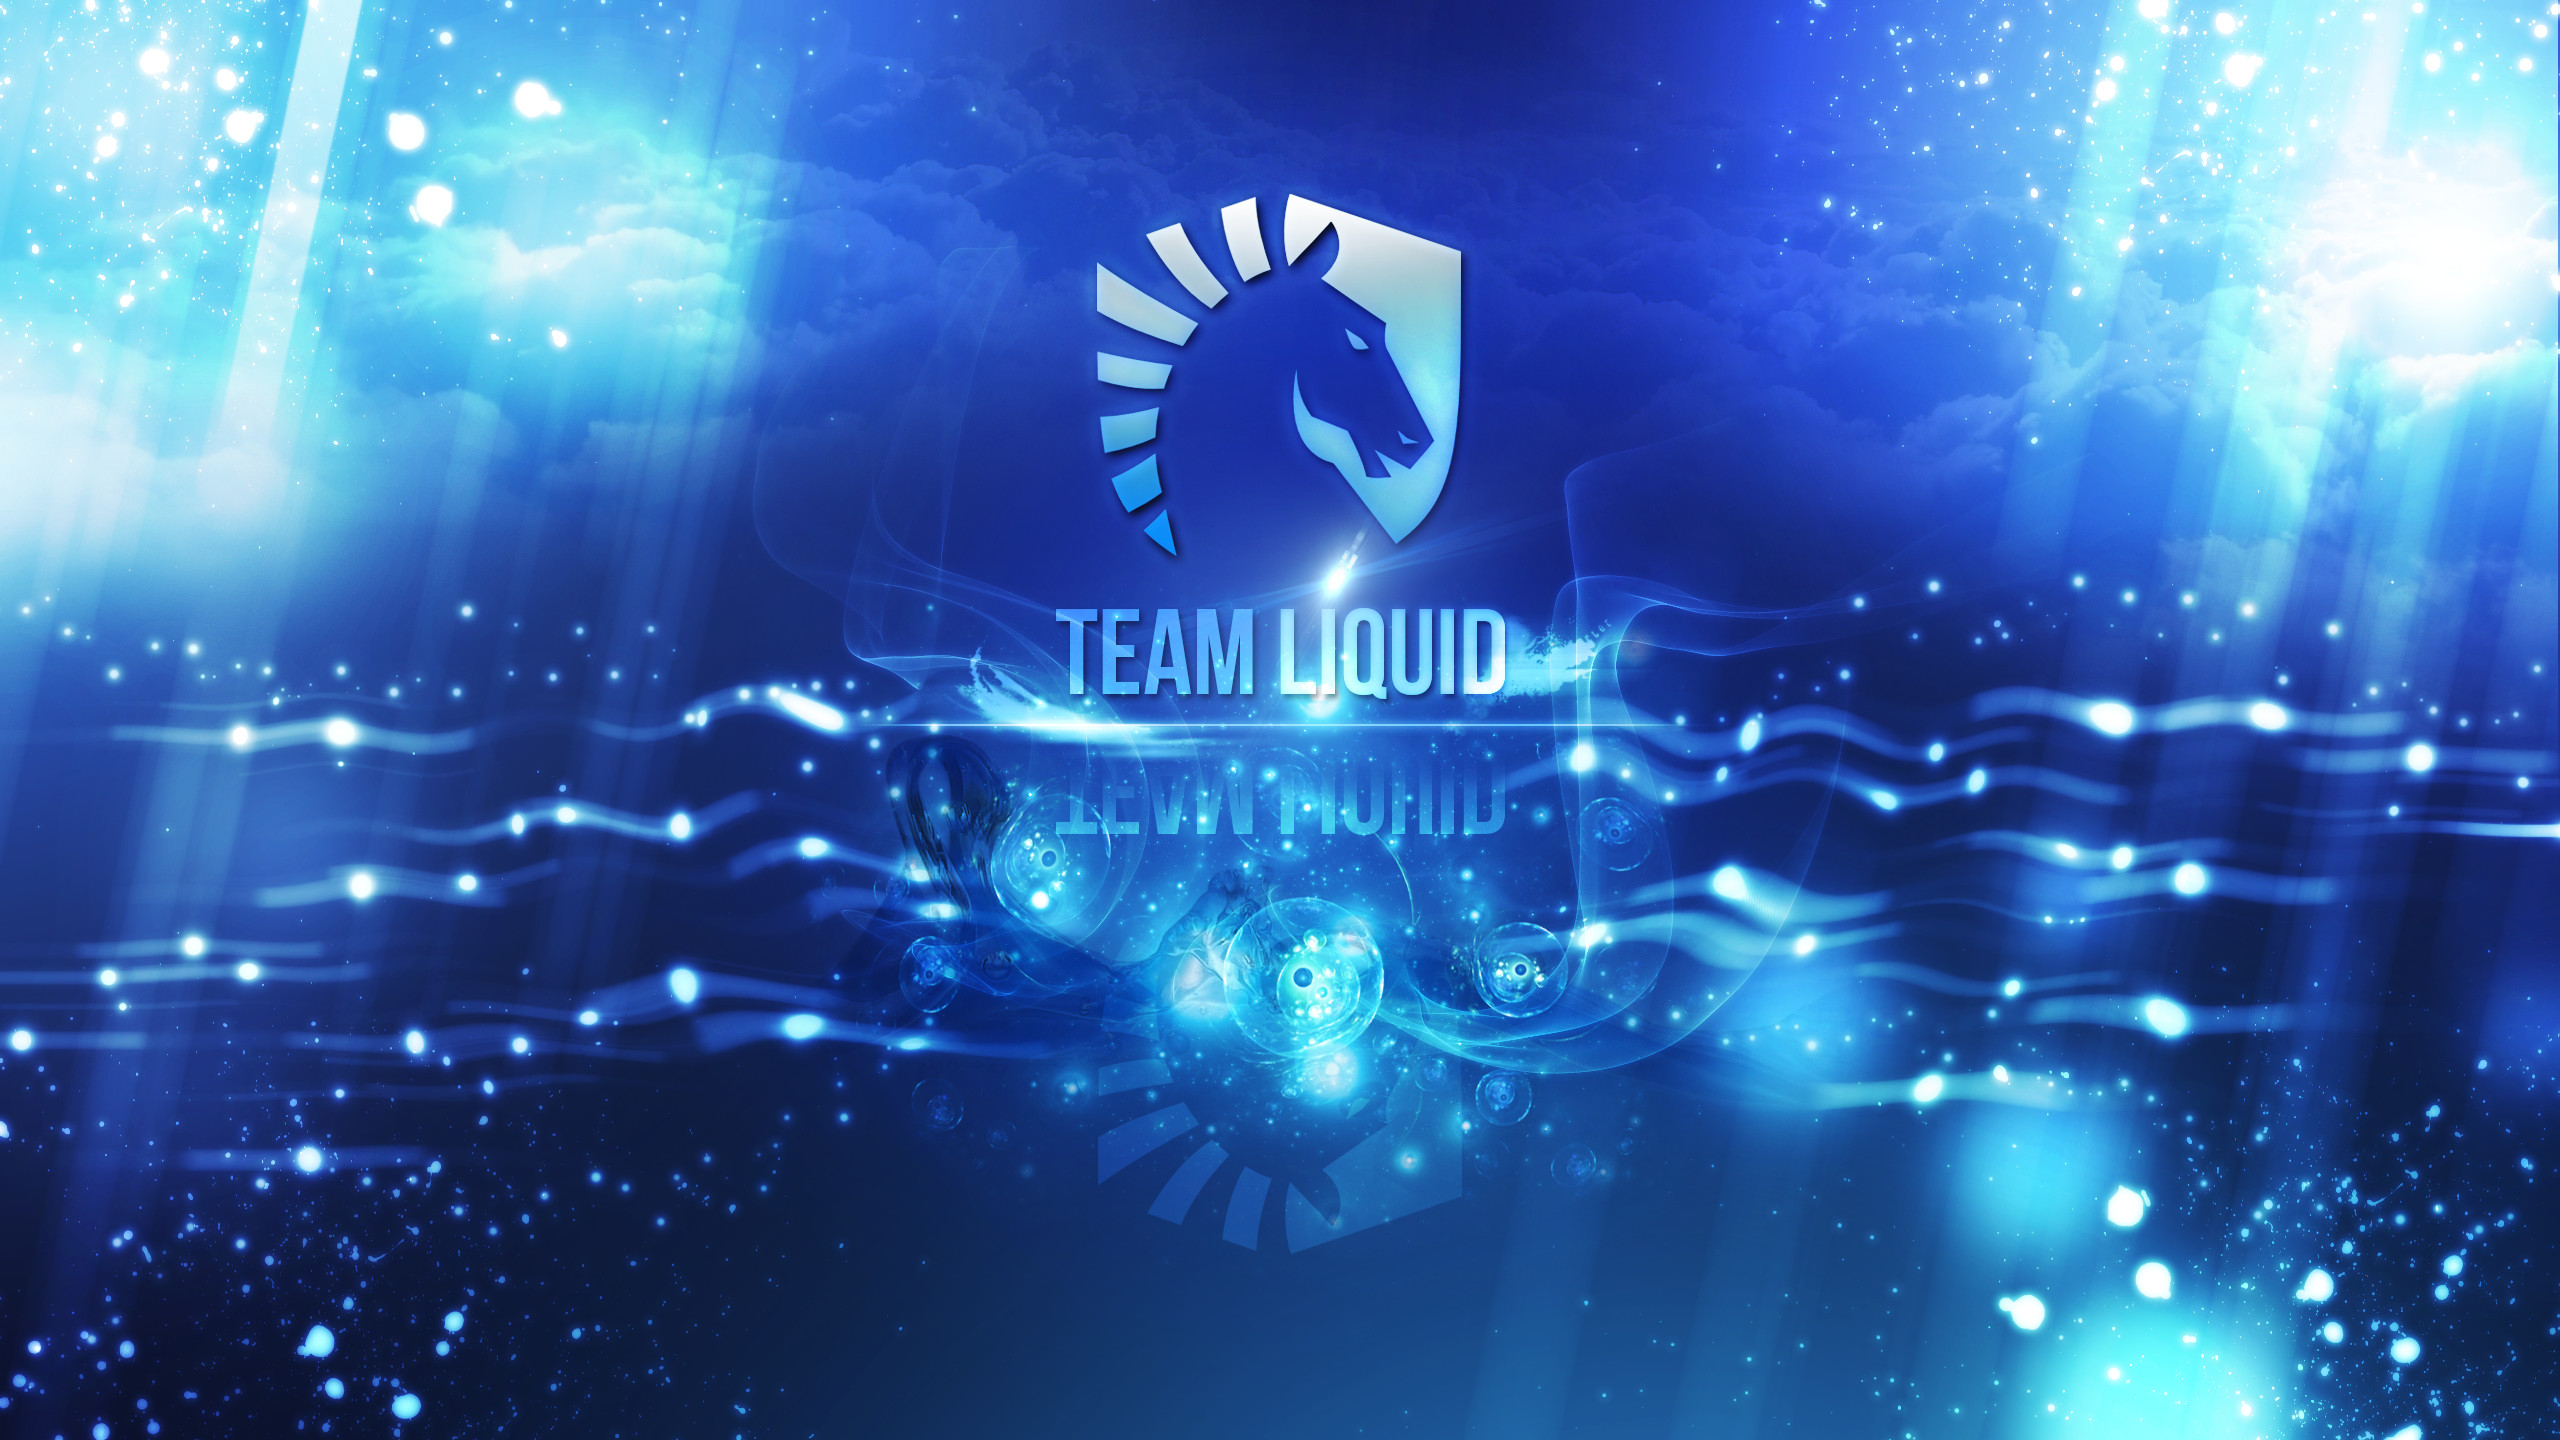 2560x1440 ... Team Liquid Wallpaper Logo - League of Legends by Aynoe